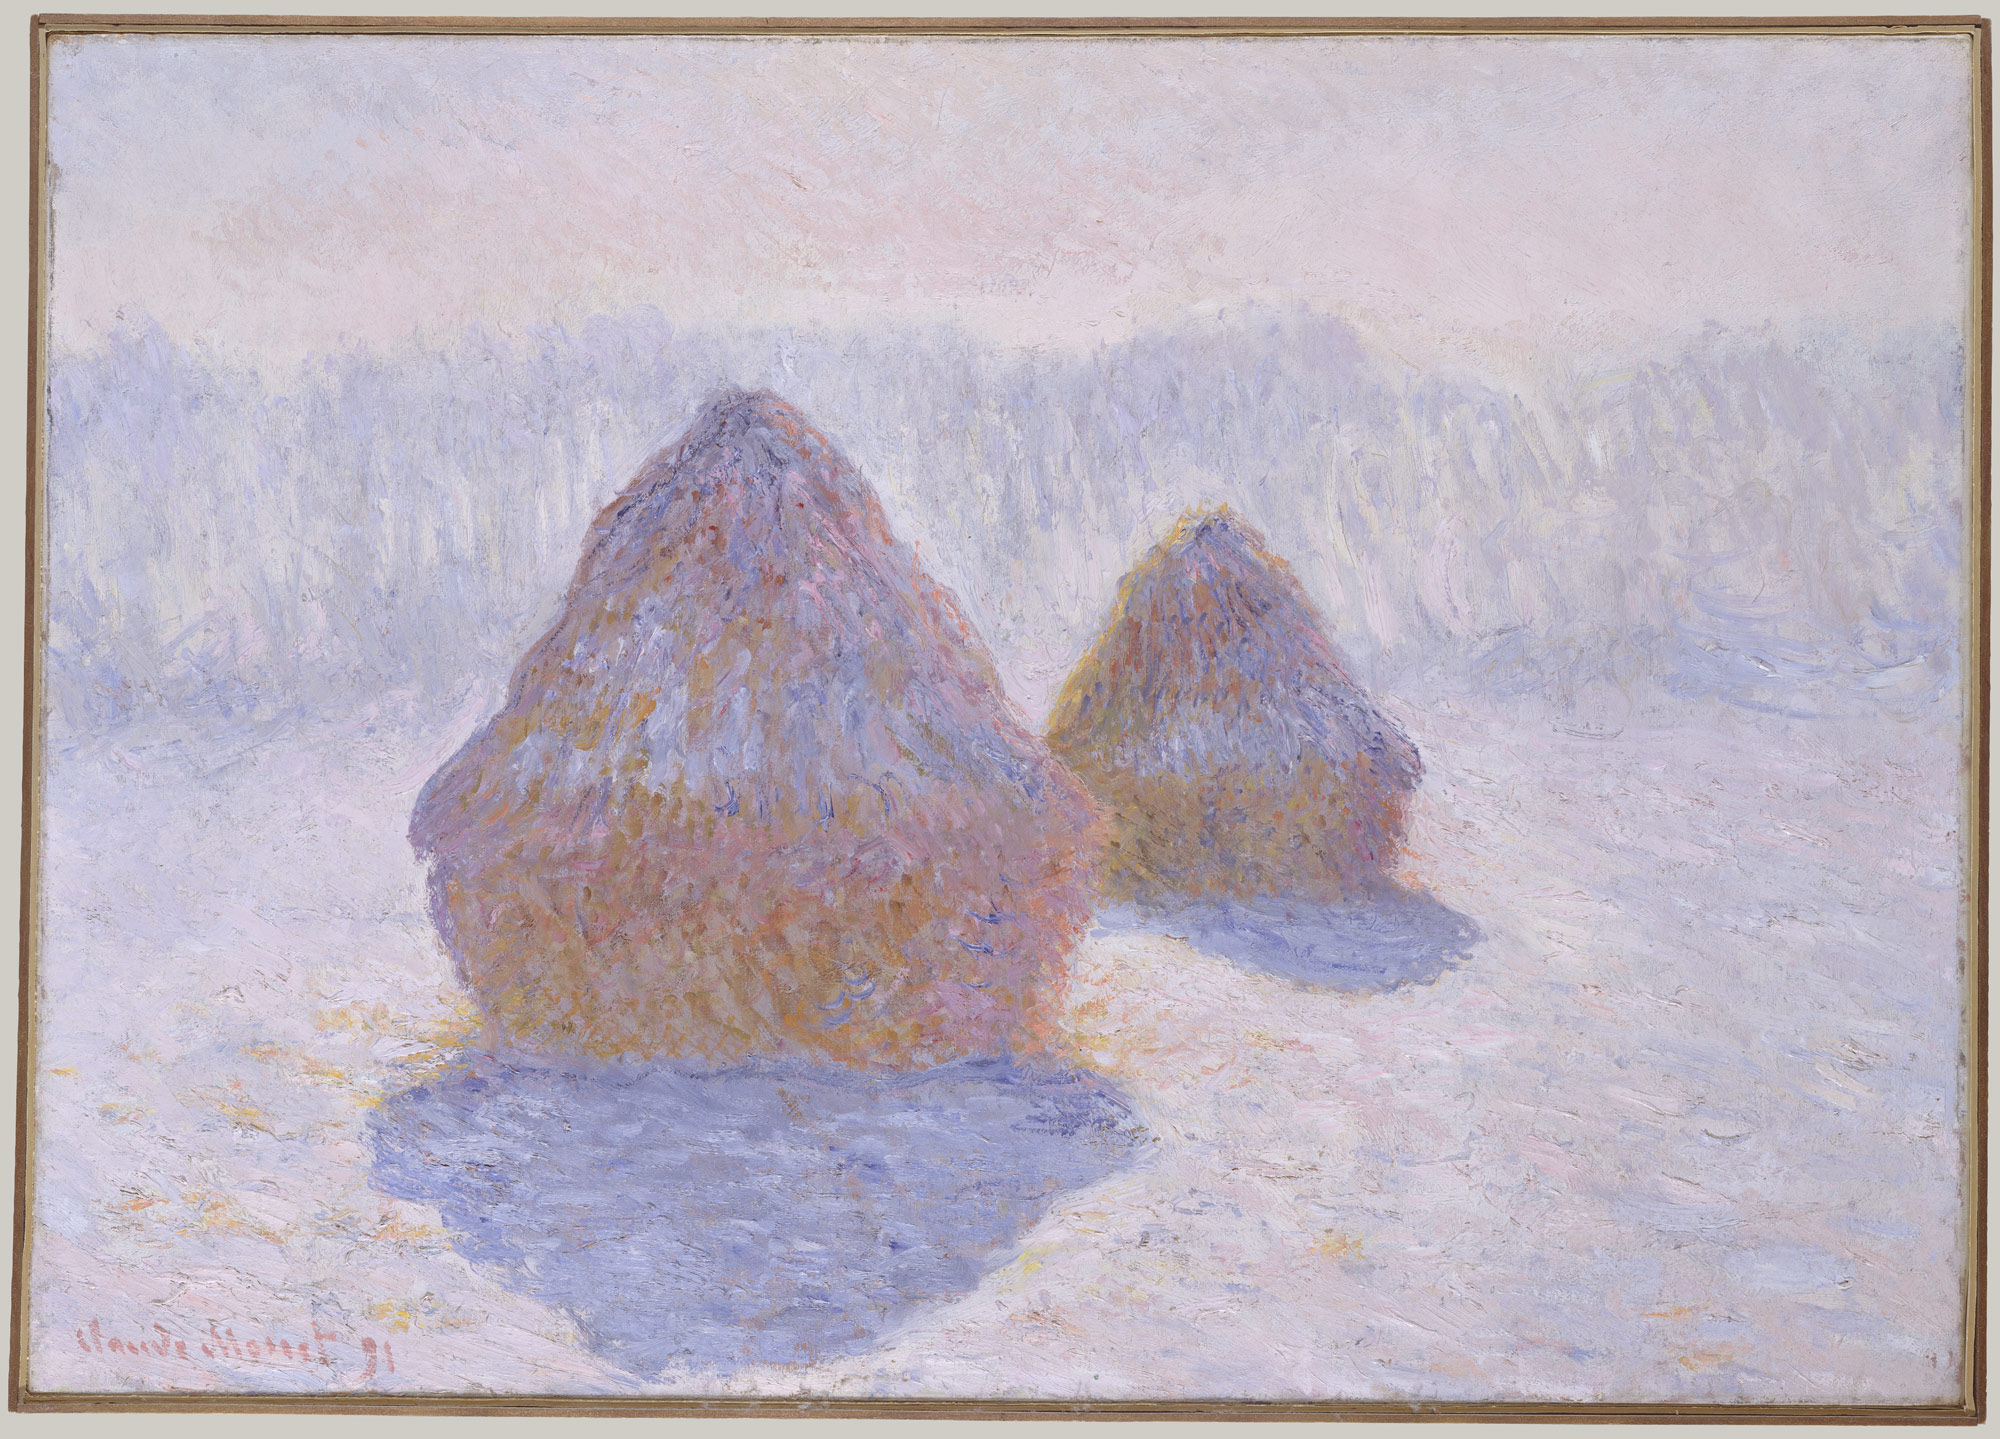 Kupky sena (Efekt sněhu a slunce) by Claude Monet - 1891 - 65.4 x 92.1 cm 